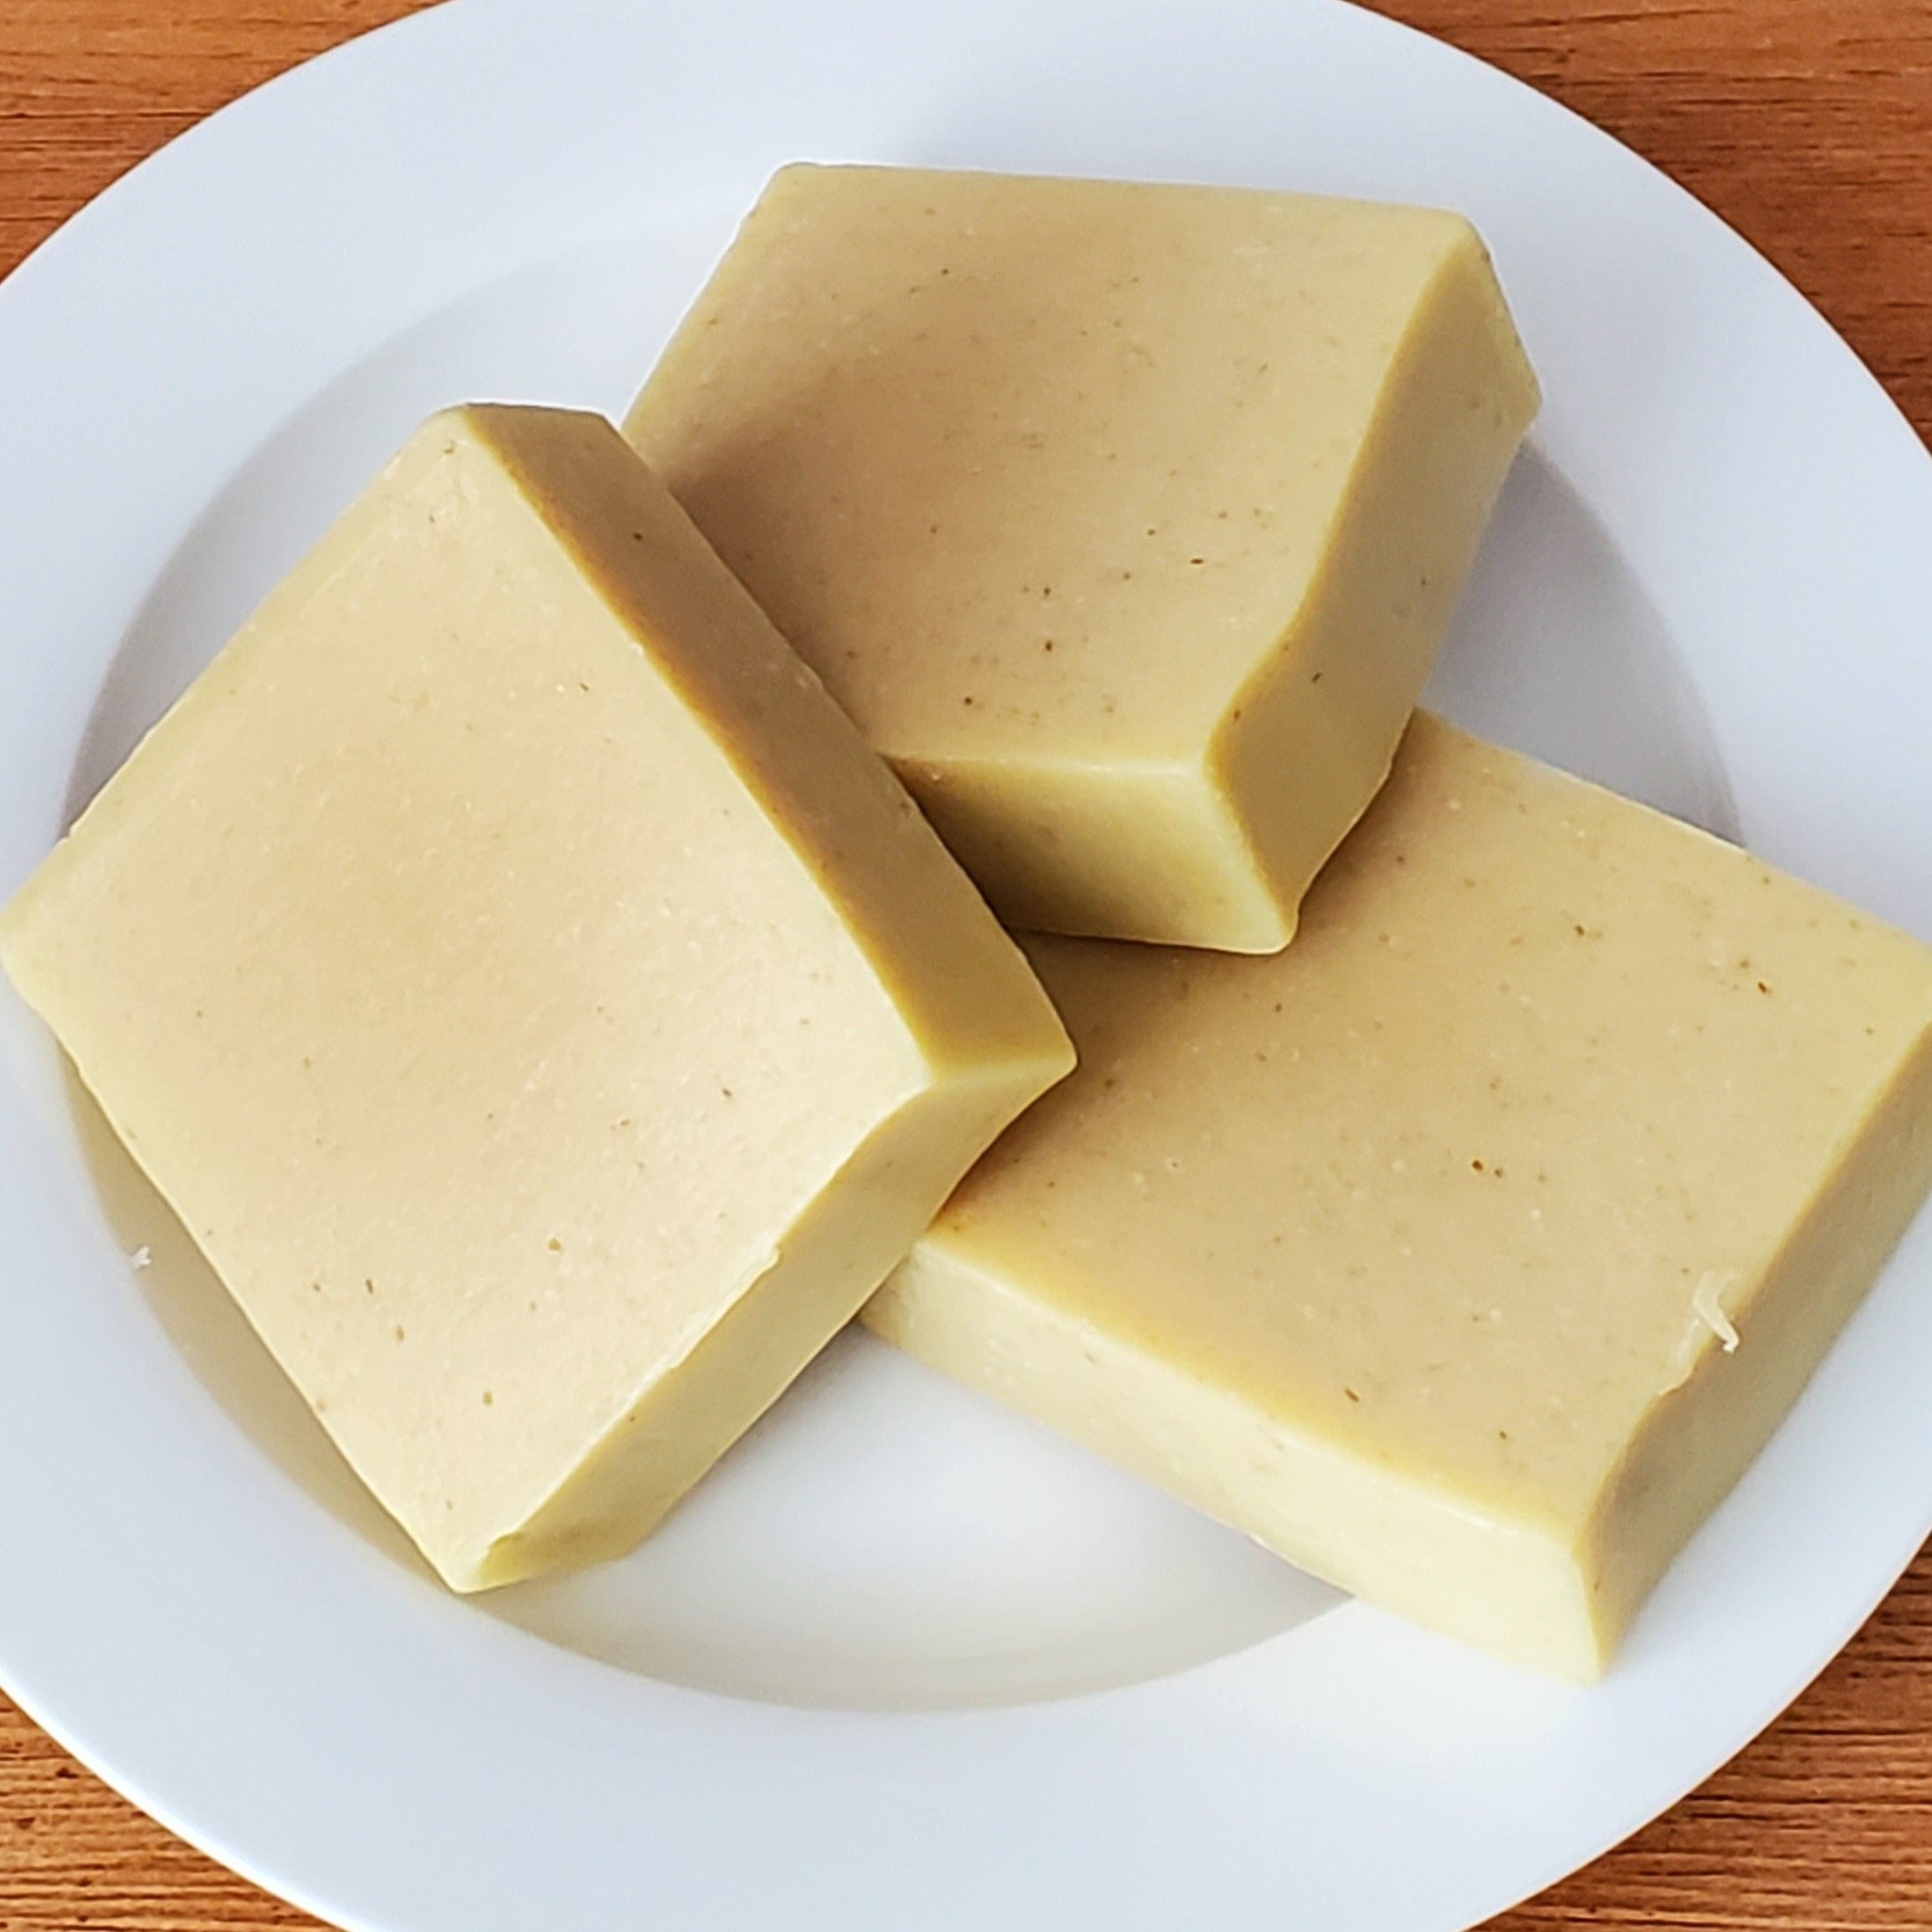 Natural Unscented Oatmeal Bar Soap for Sensitive Skin